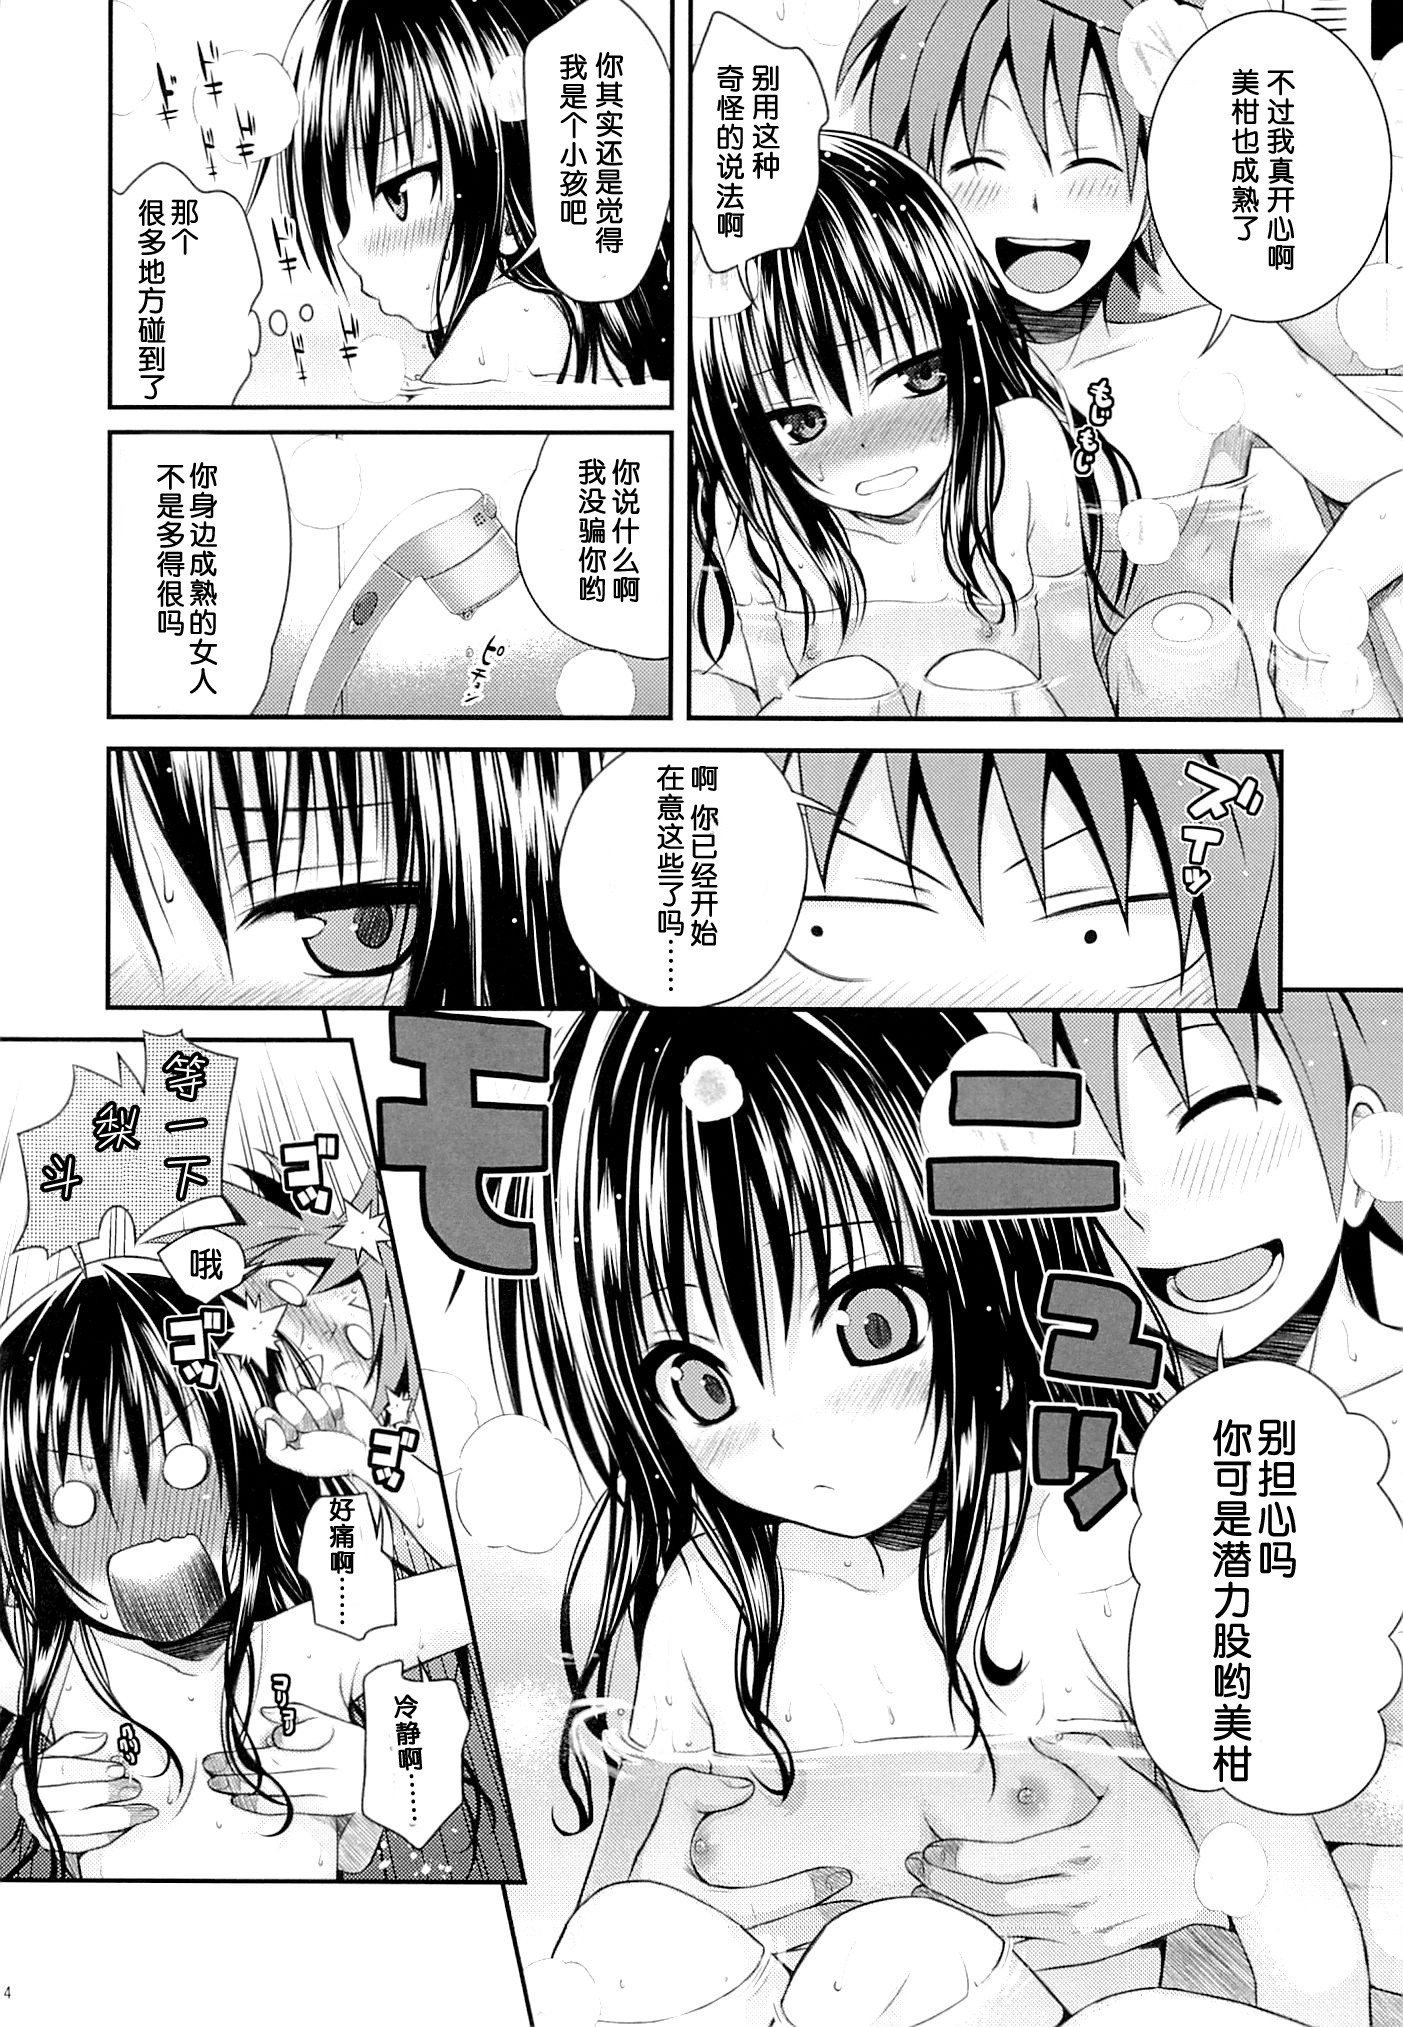 Eat the Orange in the Bath hentai manga picture 12